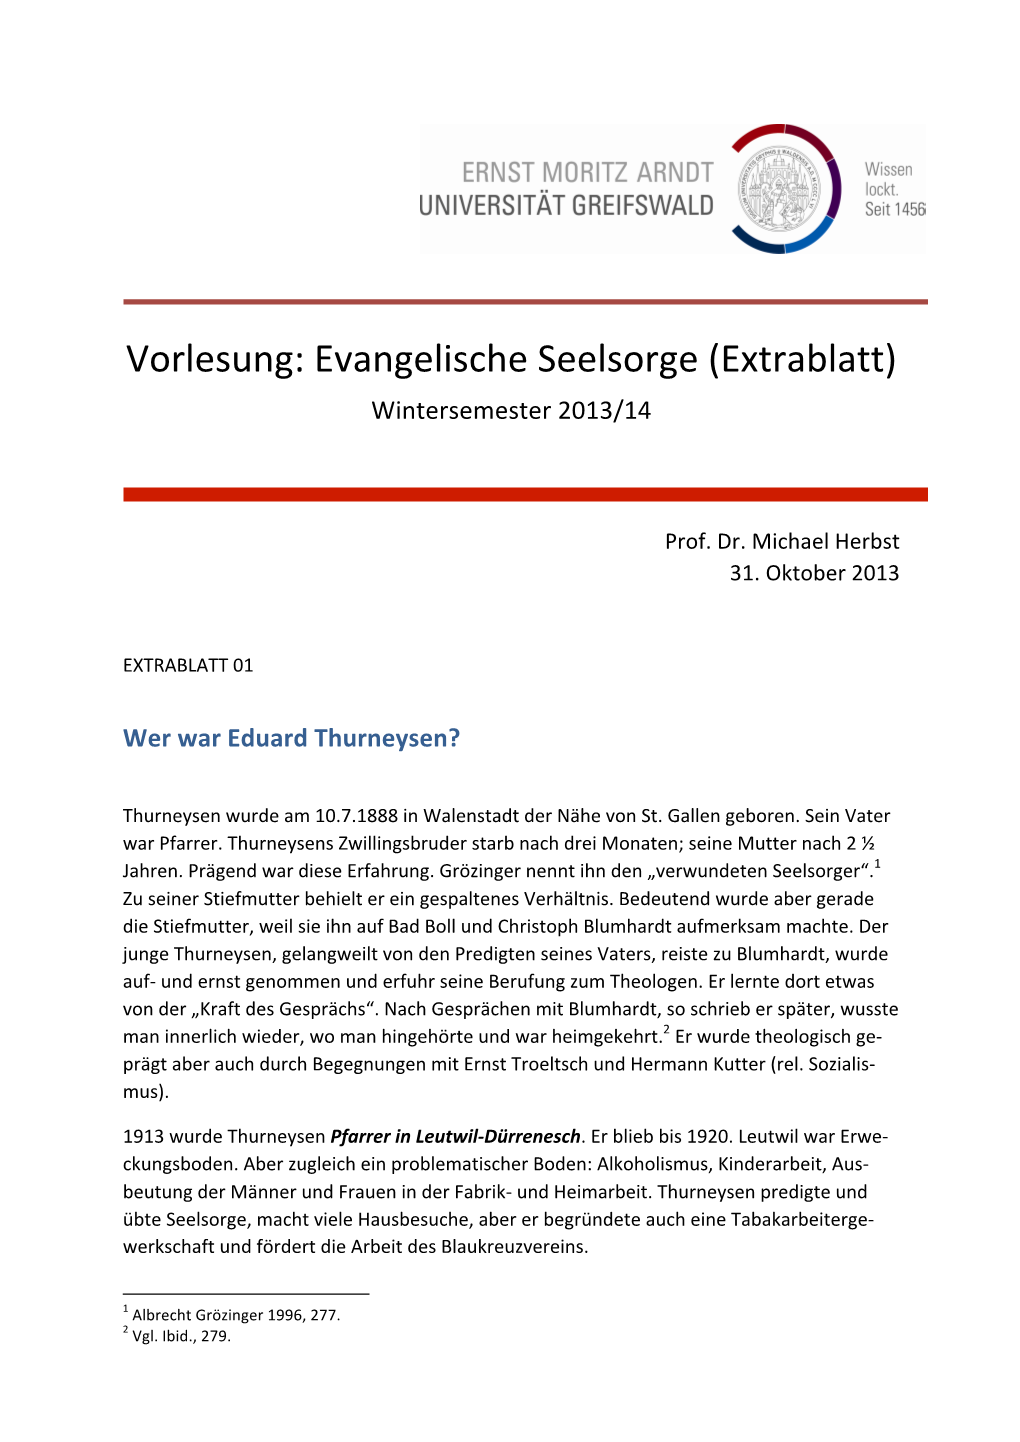 Vorlesung: Evangelische Seelsorge (Extrablatt) Wintersemester 2013/14